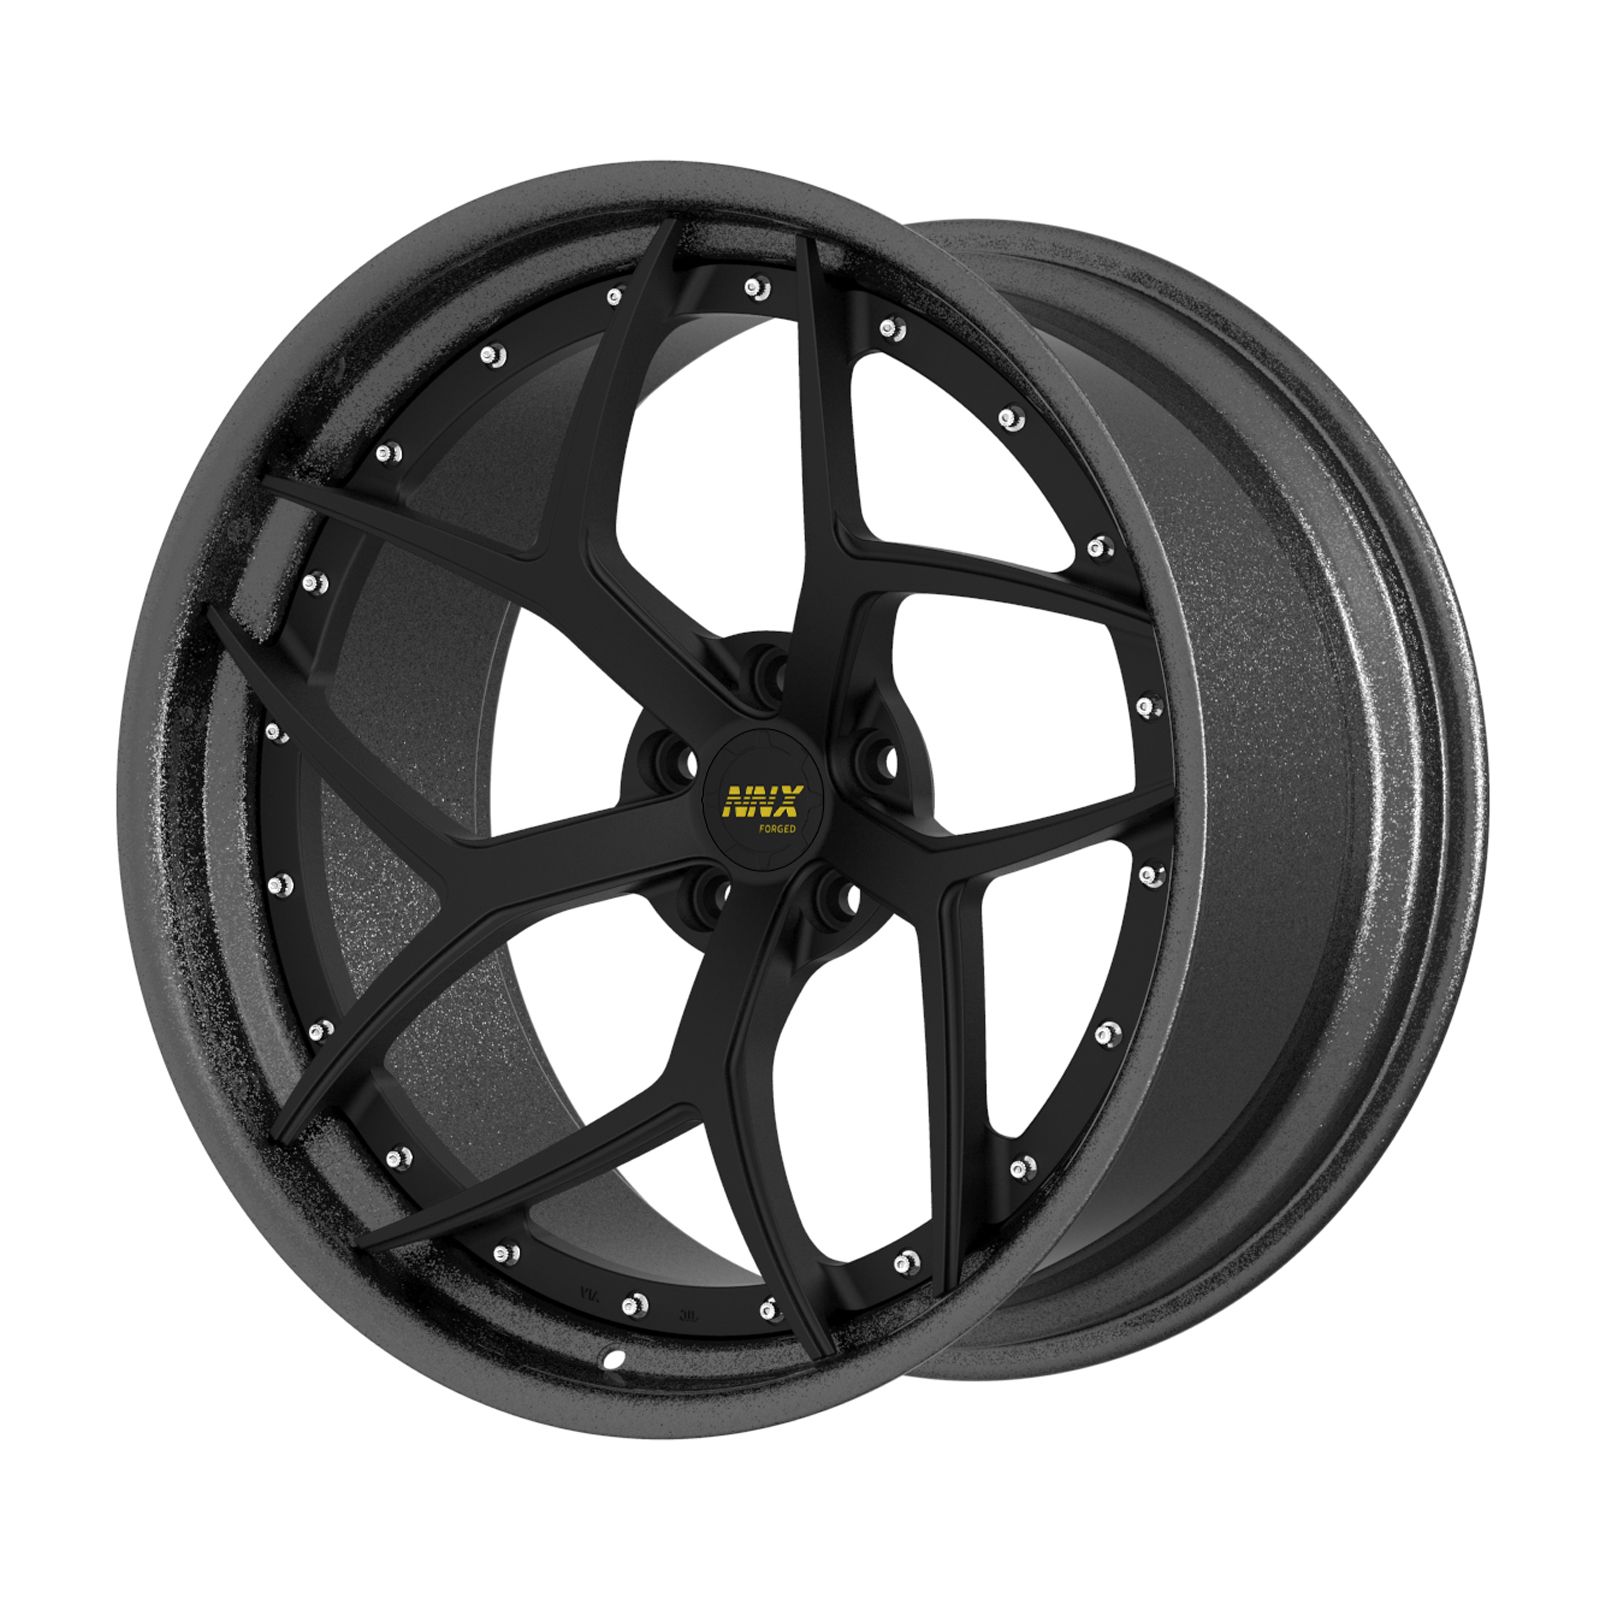 NNX-S123   16 17 18  19 20 Inch New Designs Aluminum Alloy Car Wheel Rims 5 Hole 6 Hole 8 Hole 2 piece forged Wheels